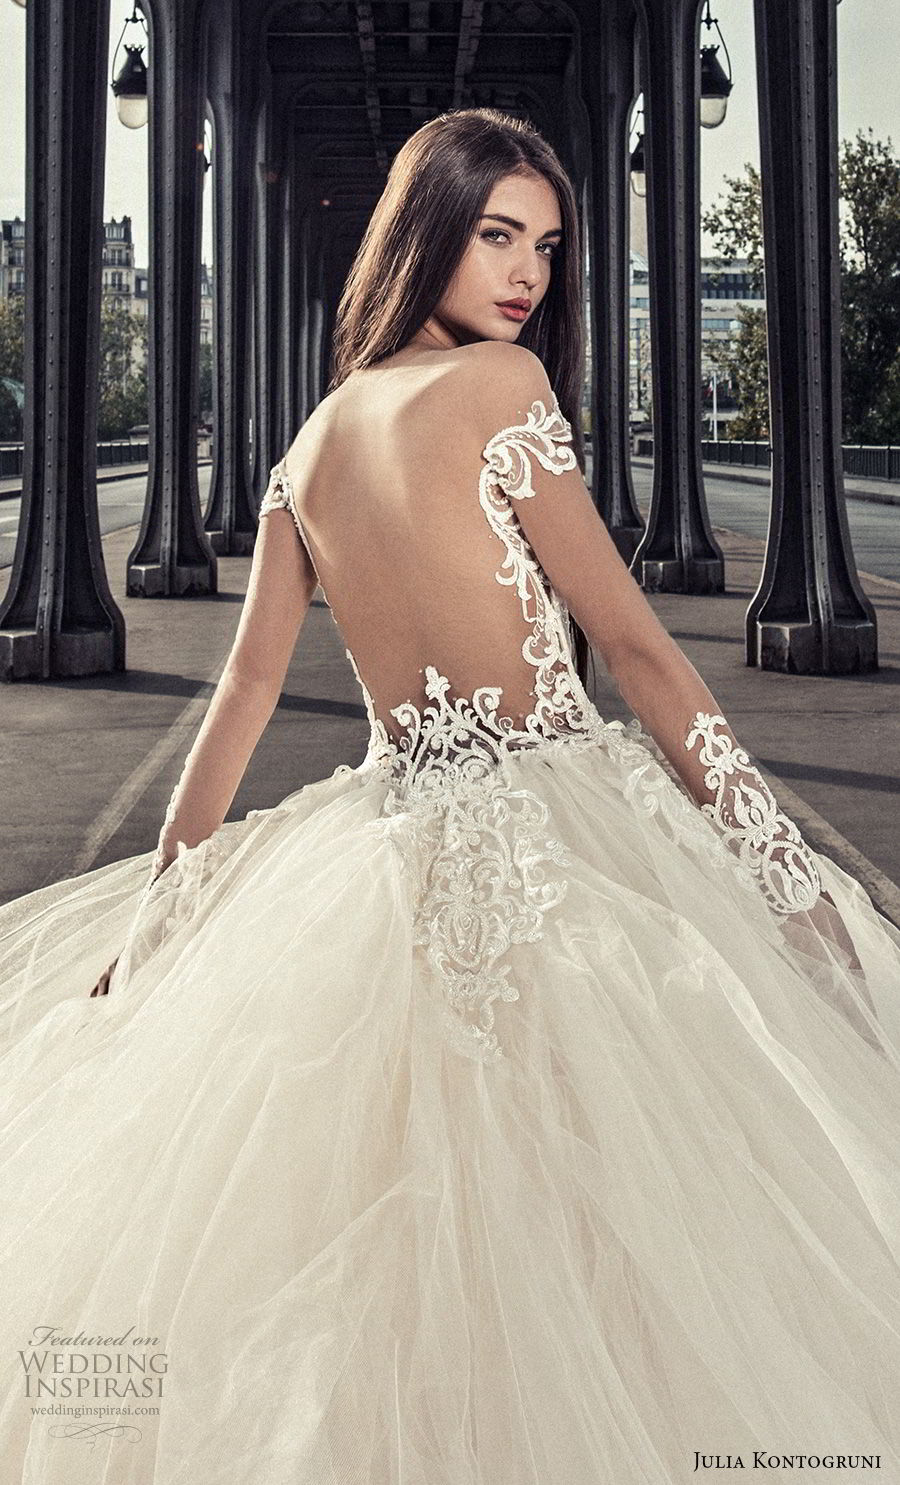 julia kontogruni 2018 bridal long sleeves deep plunging v neck heavily embellished bodice princess ball gown wedding dress open back royal train (2) zbv